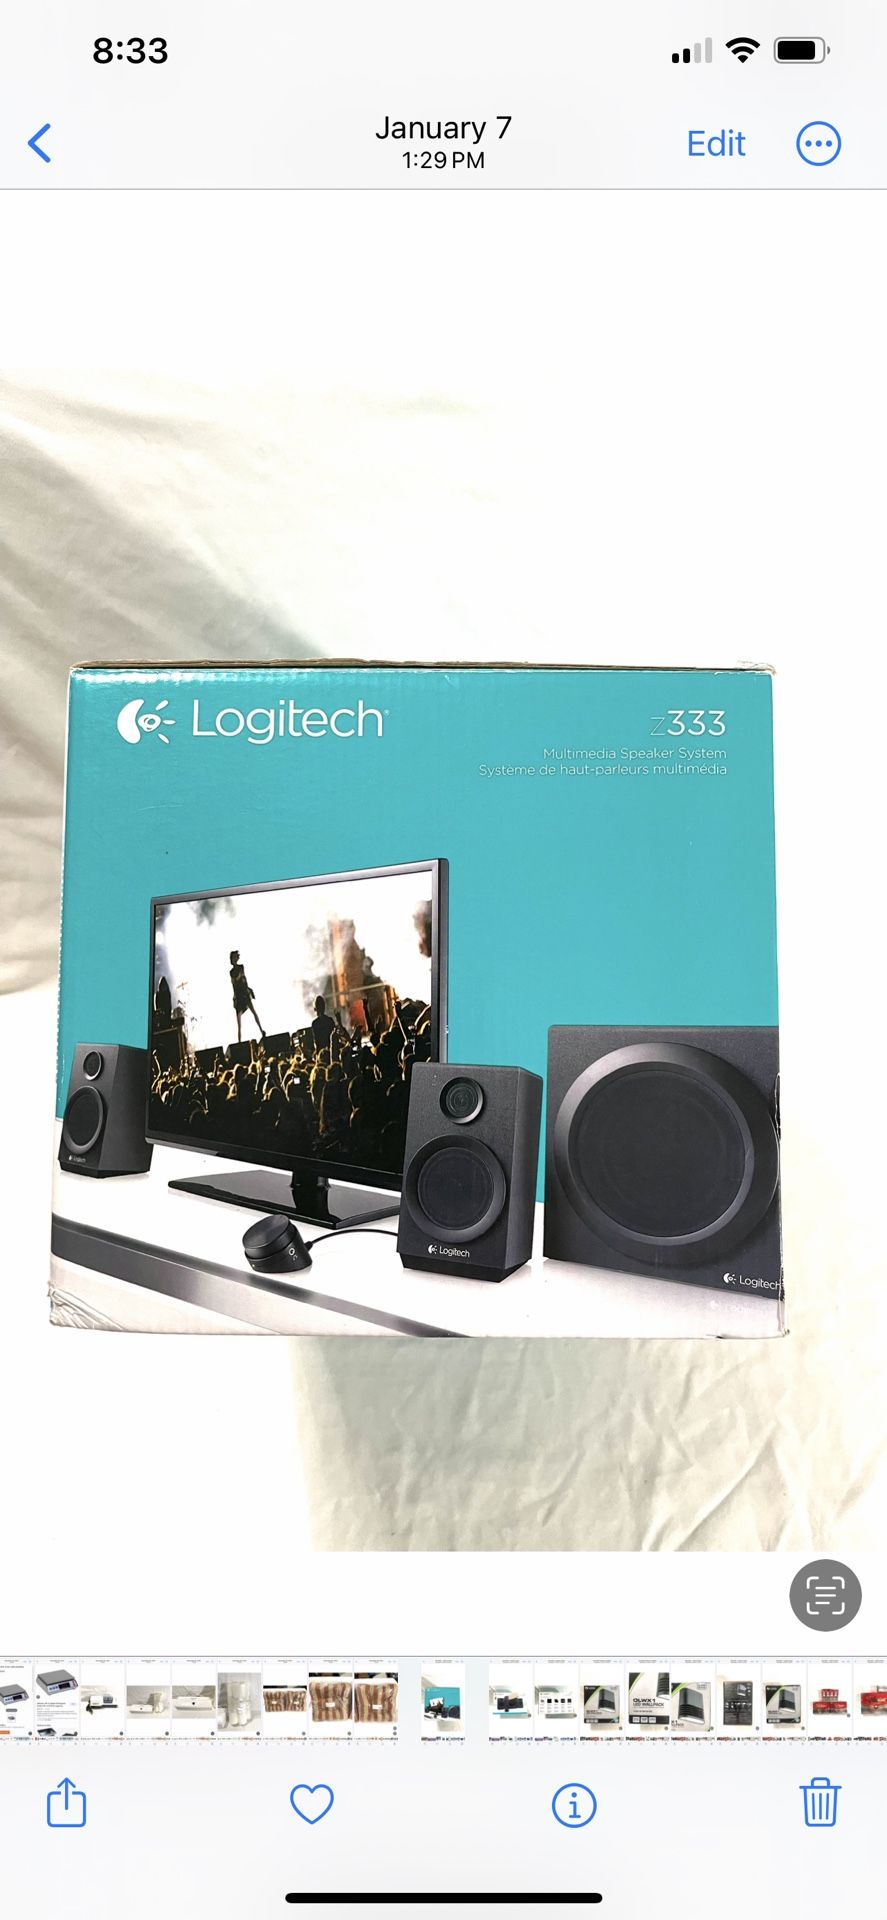 New Logitech  Z333 Multimedia Speaker System. Great For Computer System. Retails for $113.